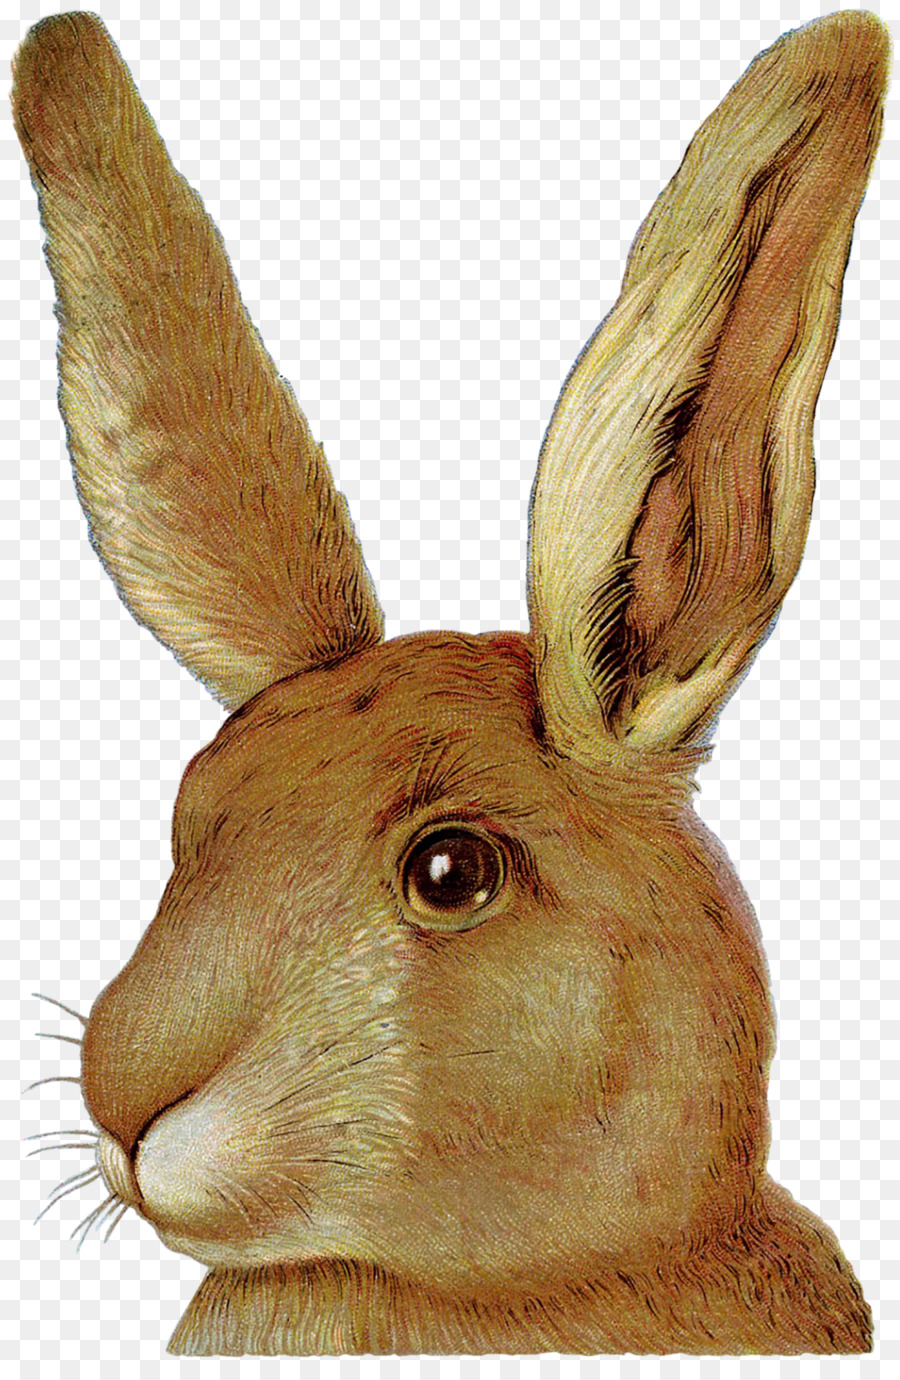 Easter Bunny European rabbit Domestic rabbit - bunny peep outline png hare rabbit png download - 1187*1800 - Free Transparent Easter Bunny png Download.